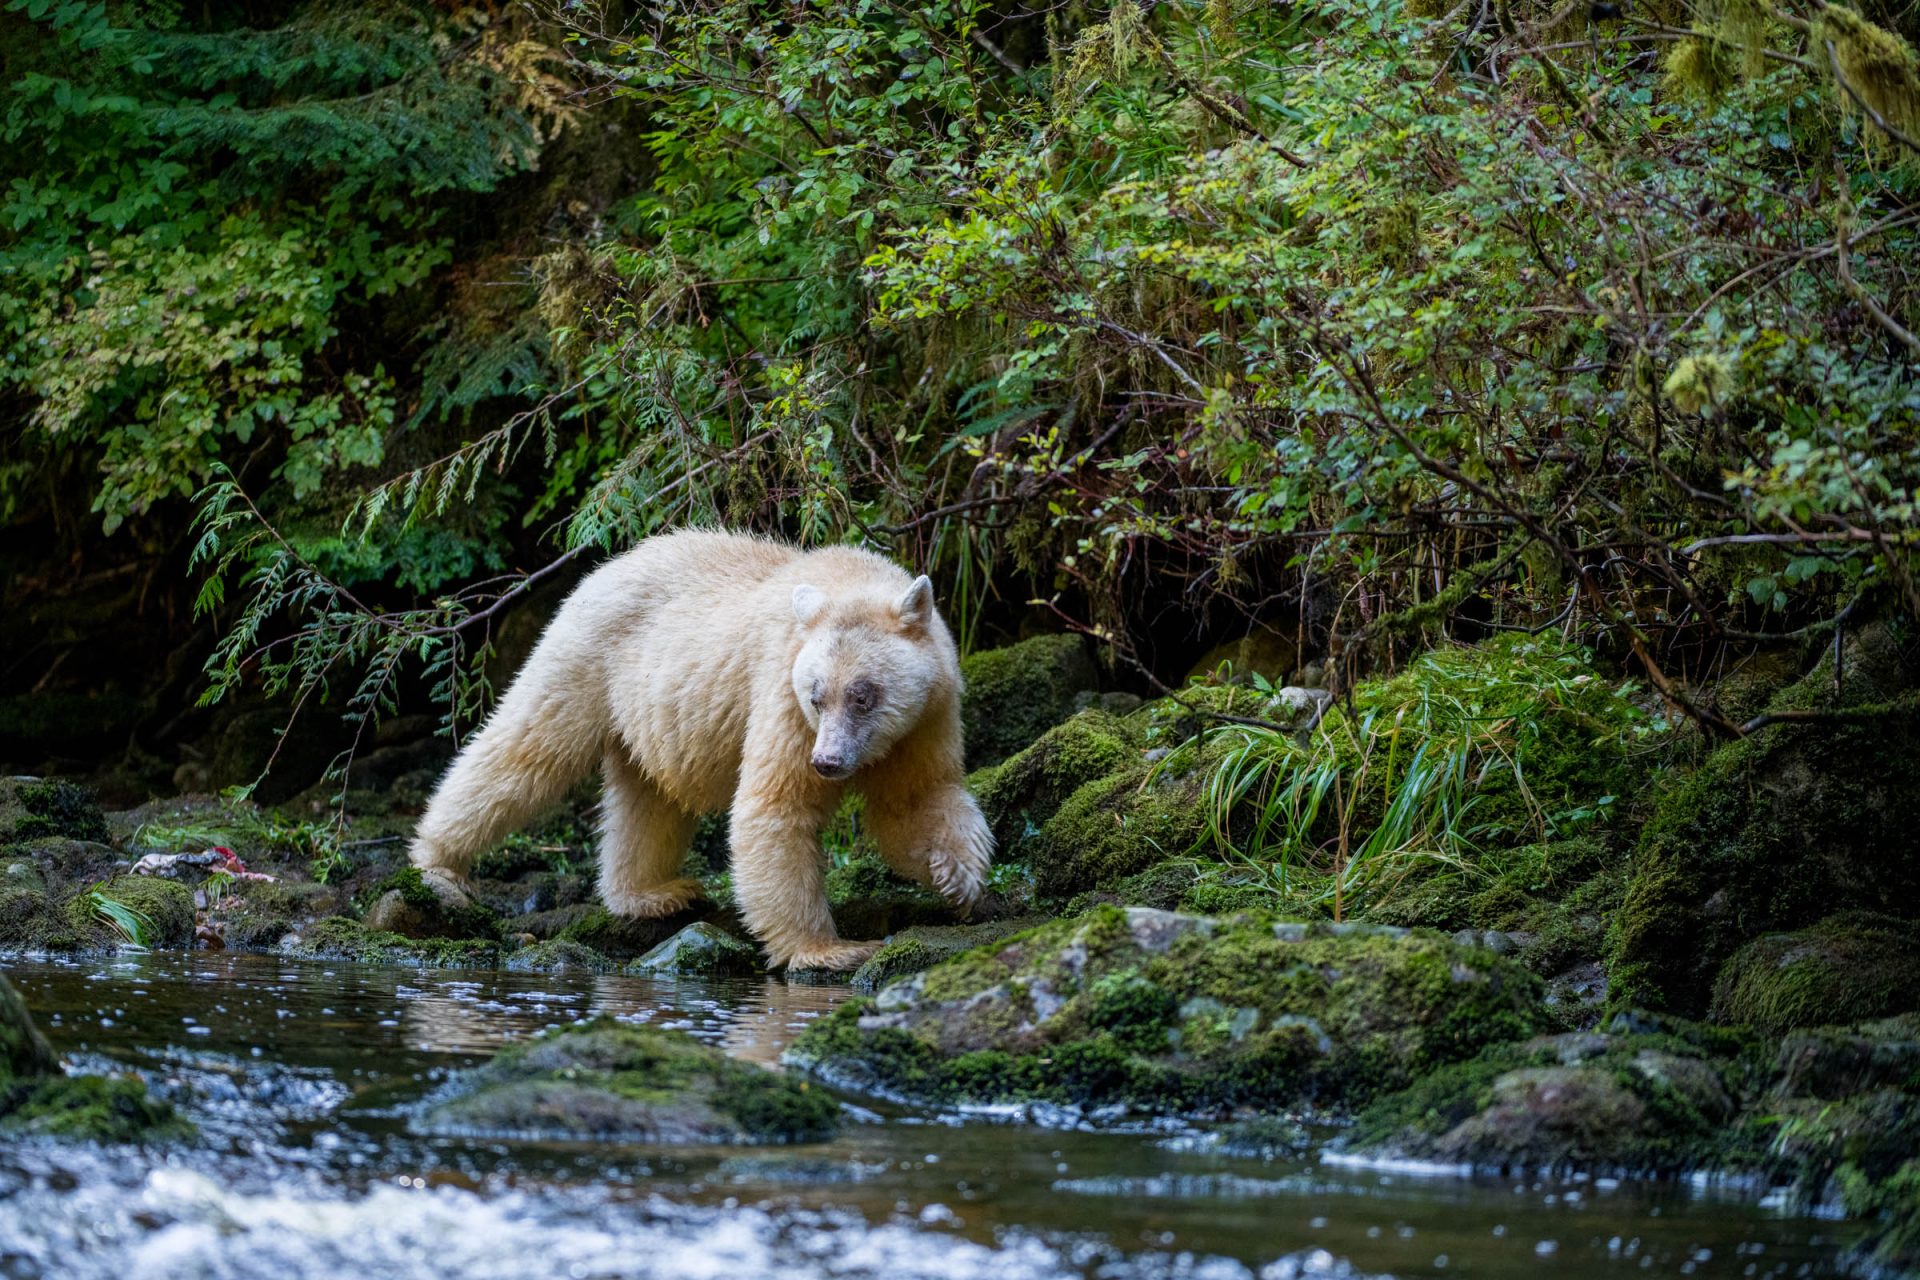 A female spirit bear, or kermode bear (Ursus americanus kermodei), known as "Ma'ah," wades through a river looking for spawning salmon. Great Bear Rainforest, British Columbia, Canada.